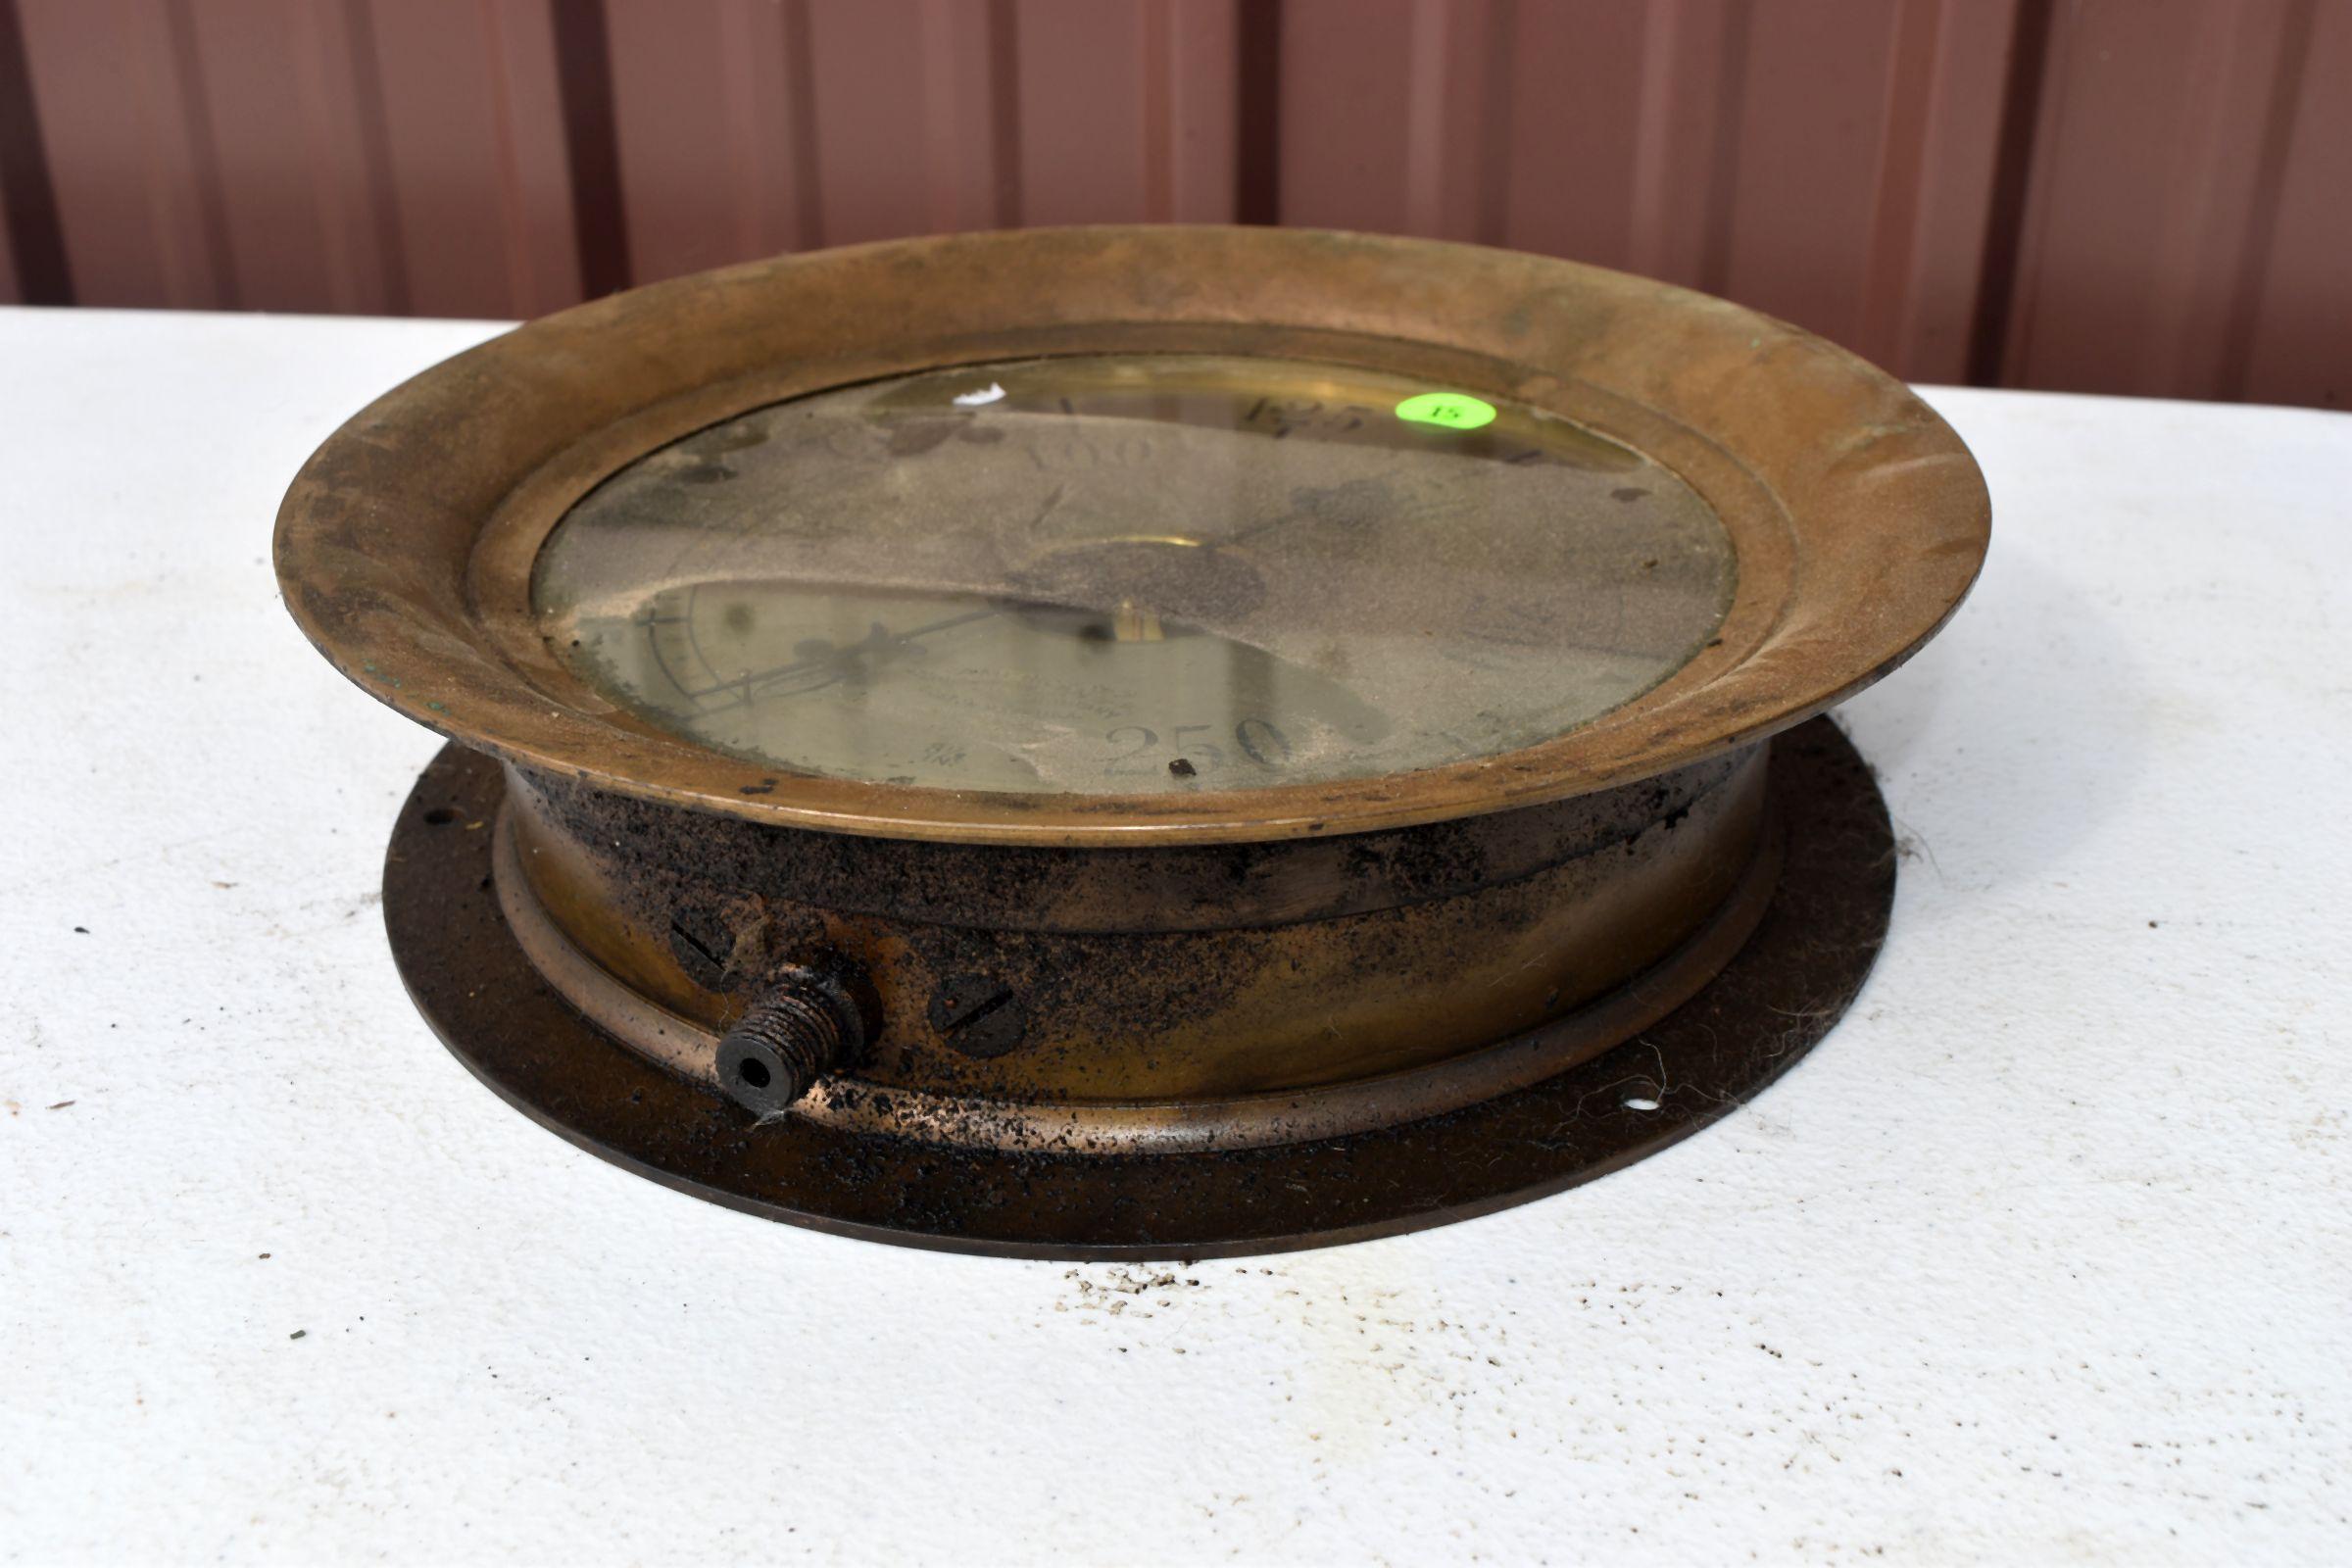 Antique vintage American Bourdon Gauge, brass steam gauge, 8.5" diameter, glass appears good